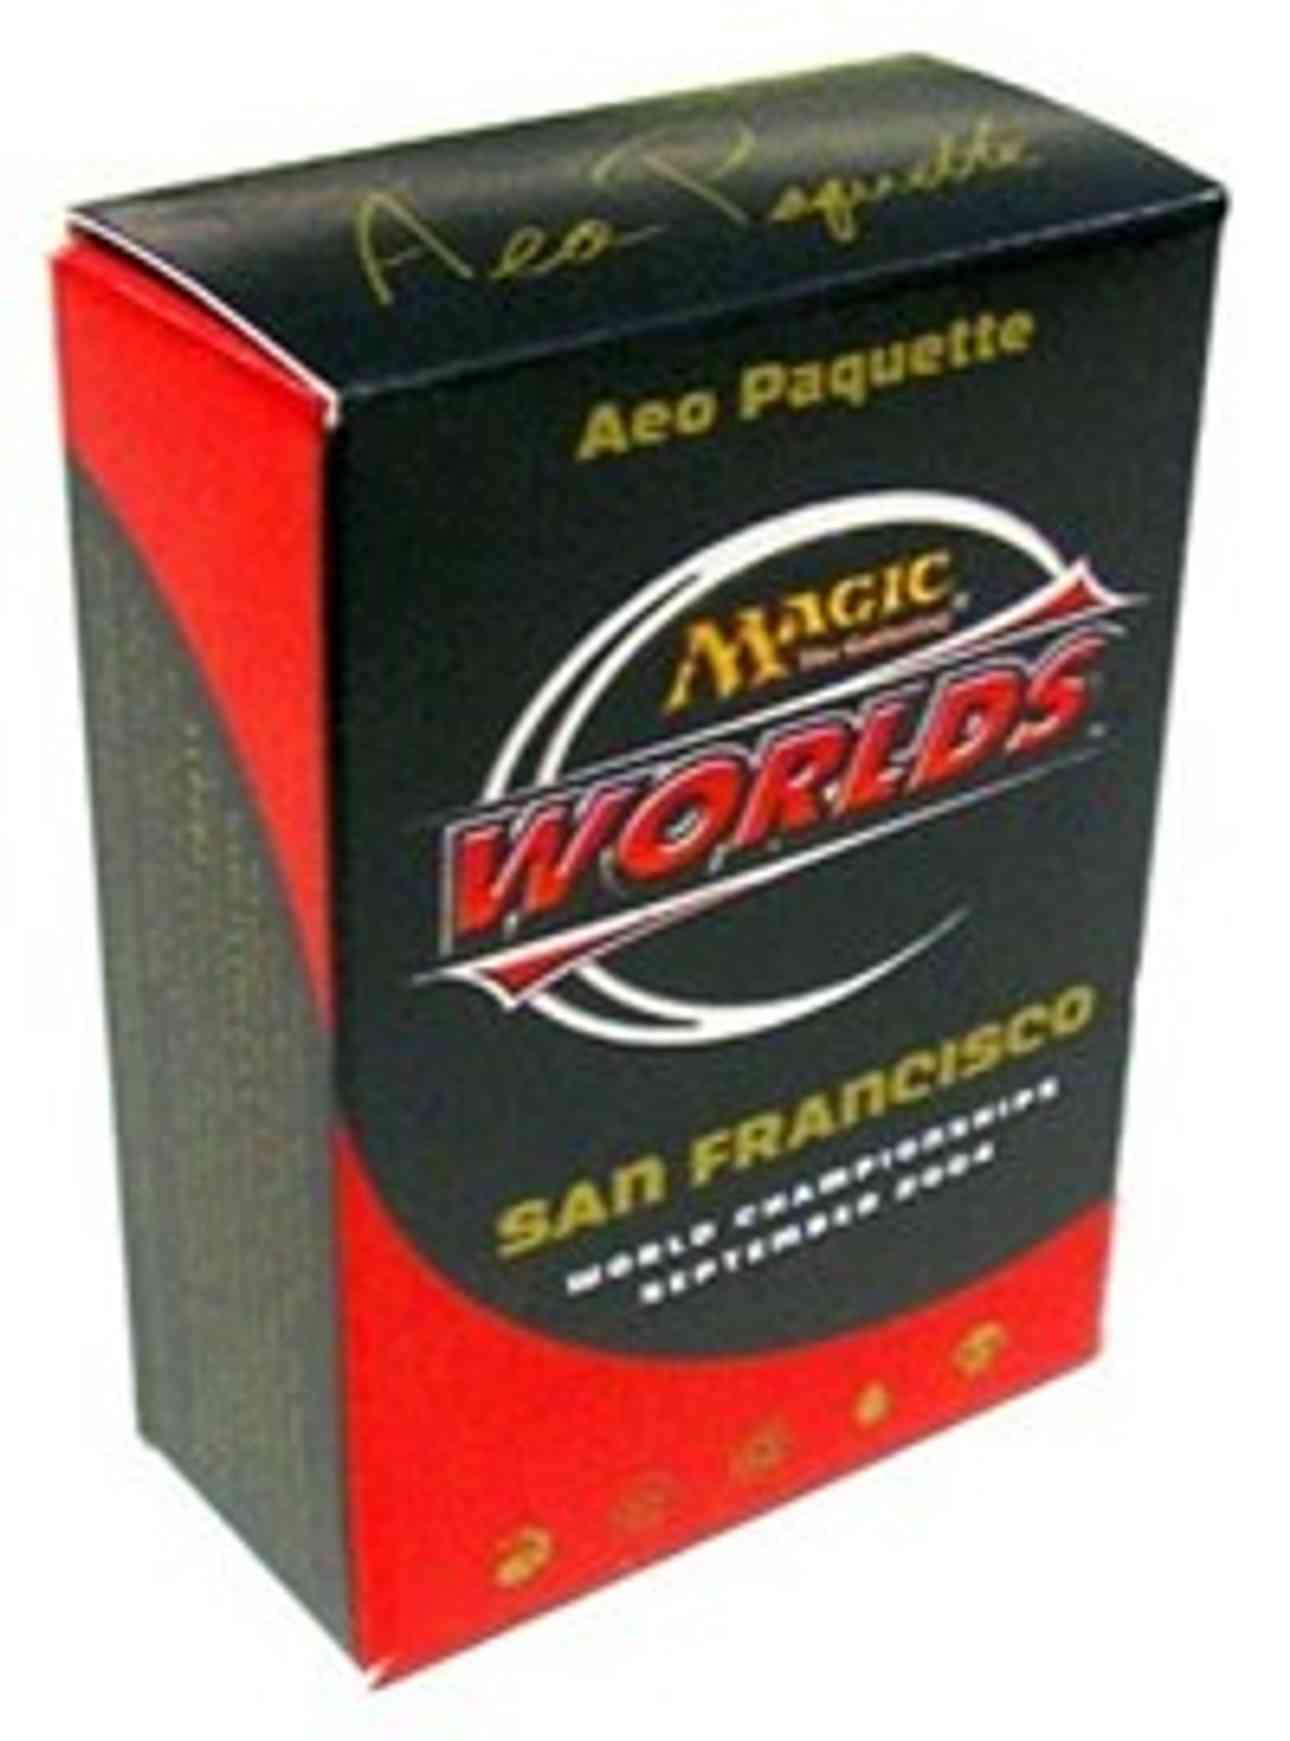 World Championship Deck: 2004 San Francisco - Aeo Paquette, Finalist magic card front